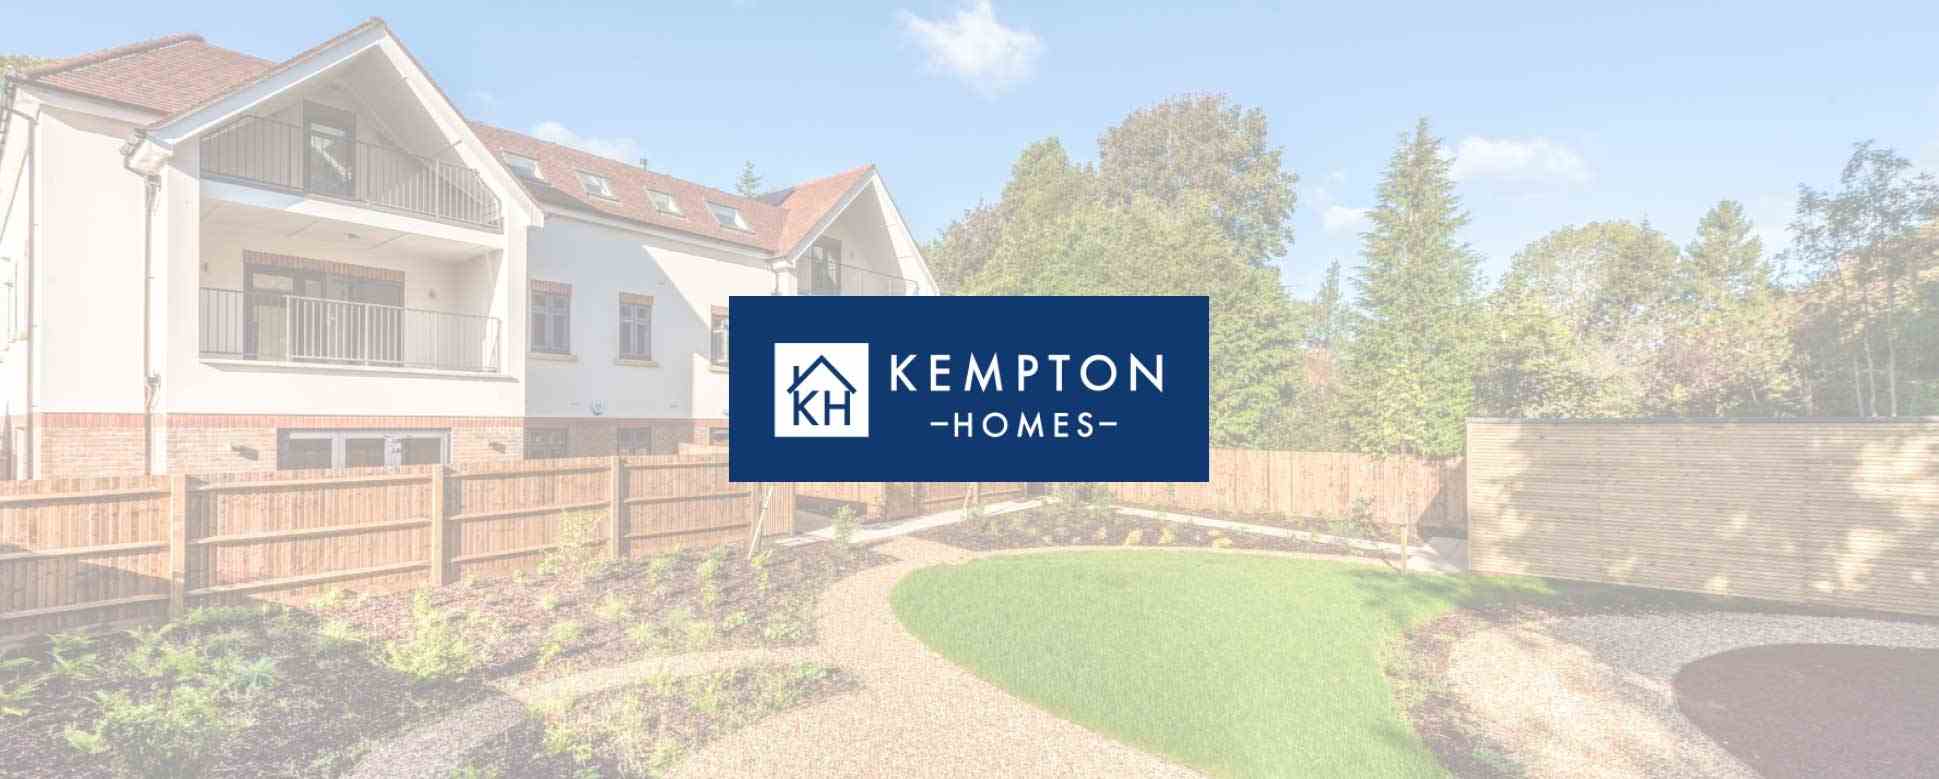 Meet the Developer – Kempton Homes